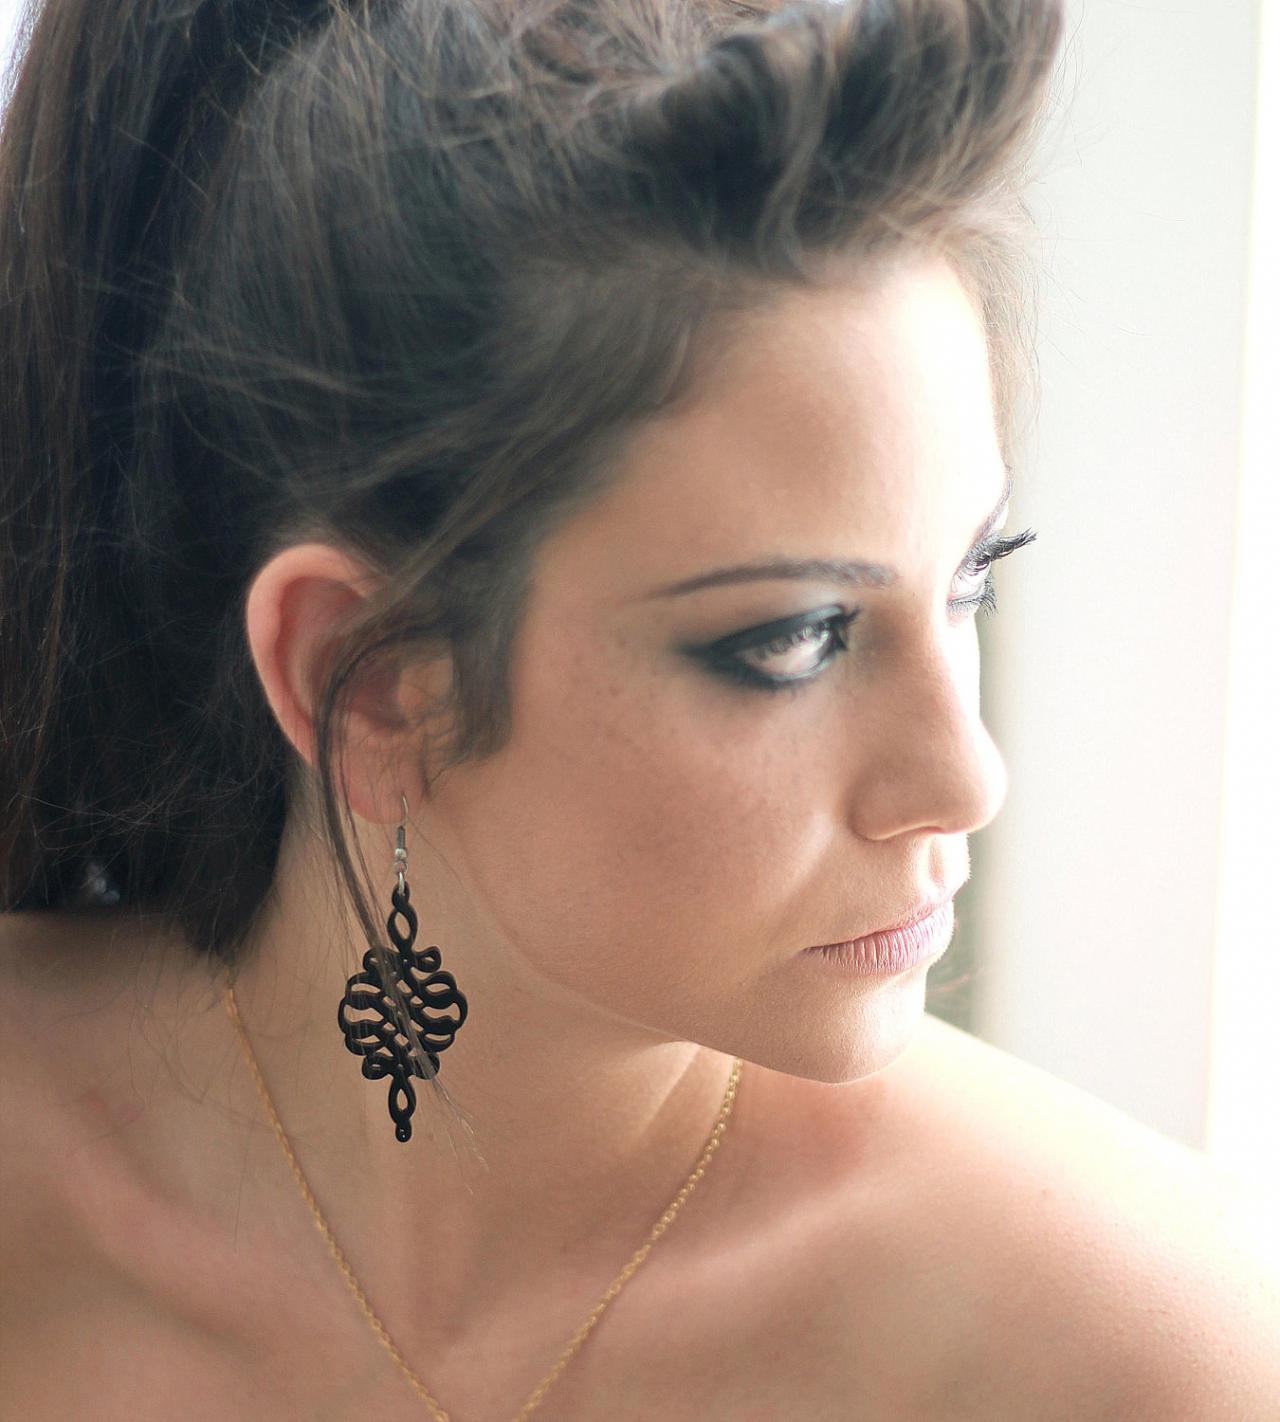 Baronyka Black Spiral Earrings - Spiral Jewelry - Swirl Jewelry - Gift For Her - Everyday Jewelry - Casual Jewelry - Minimalist Jewelry